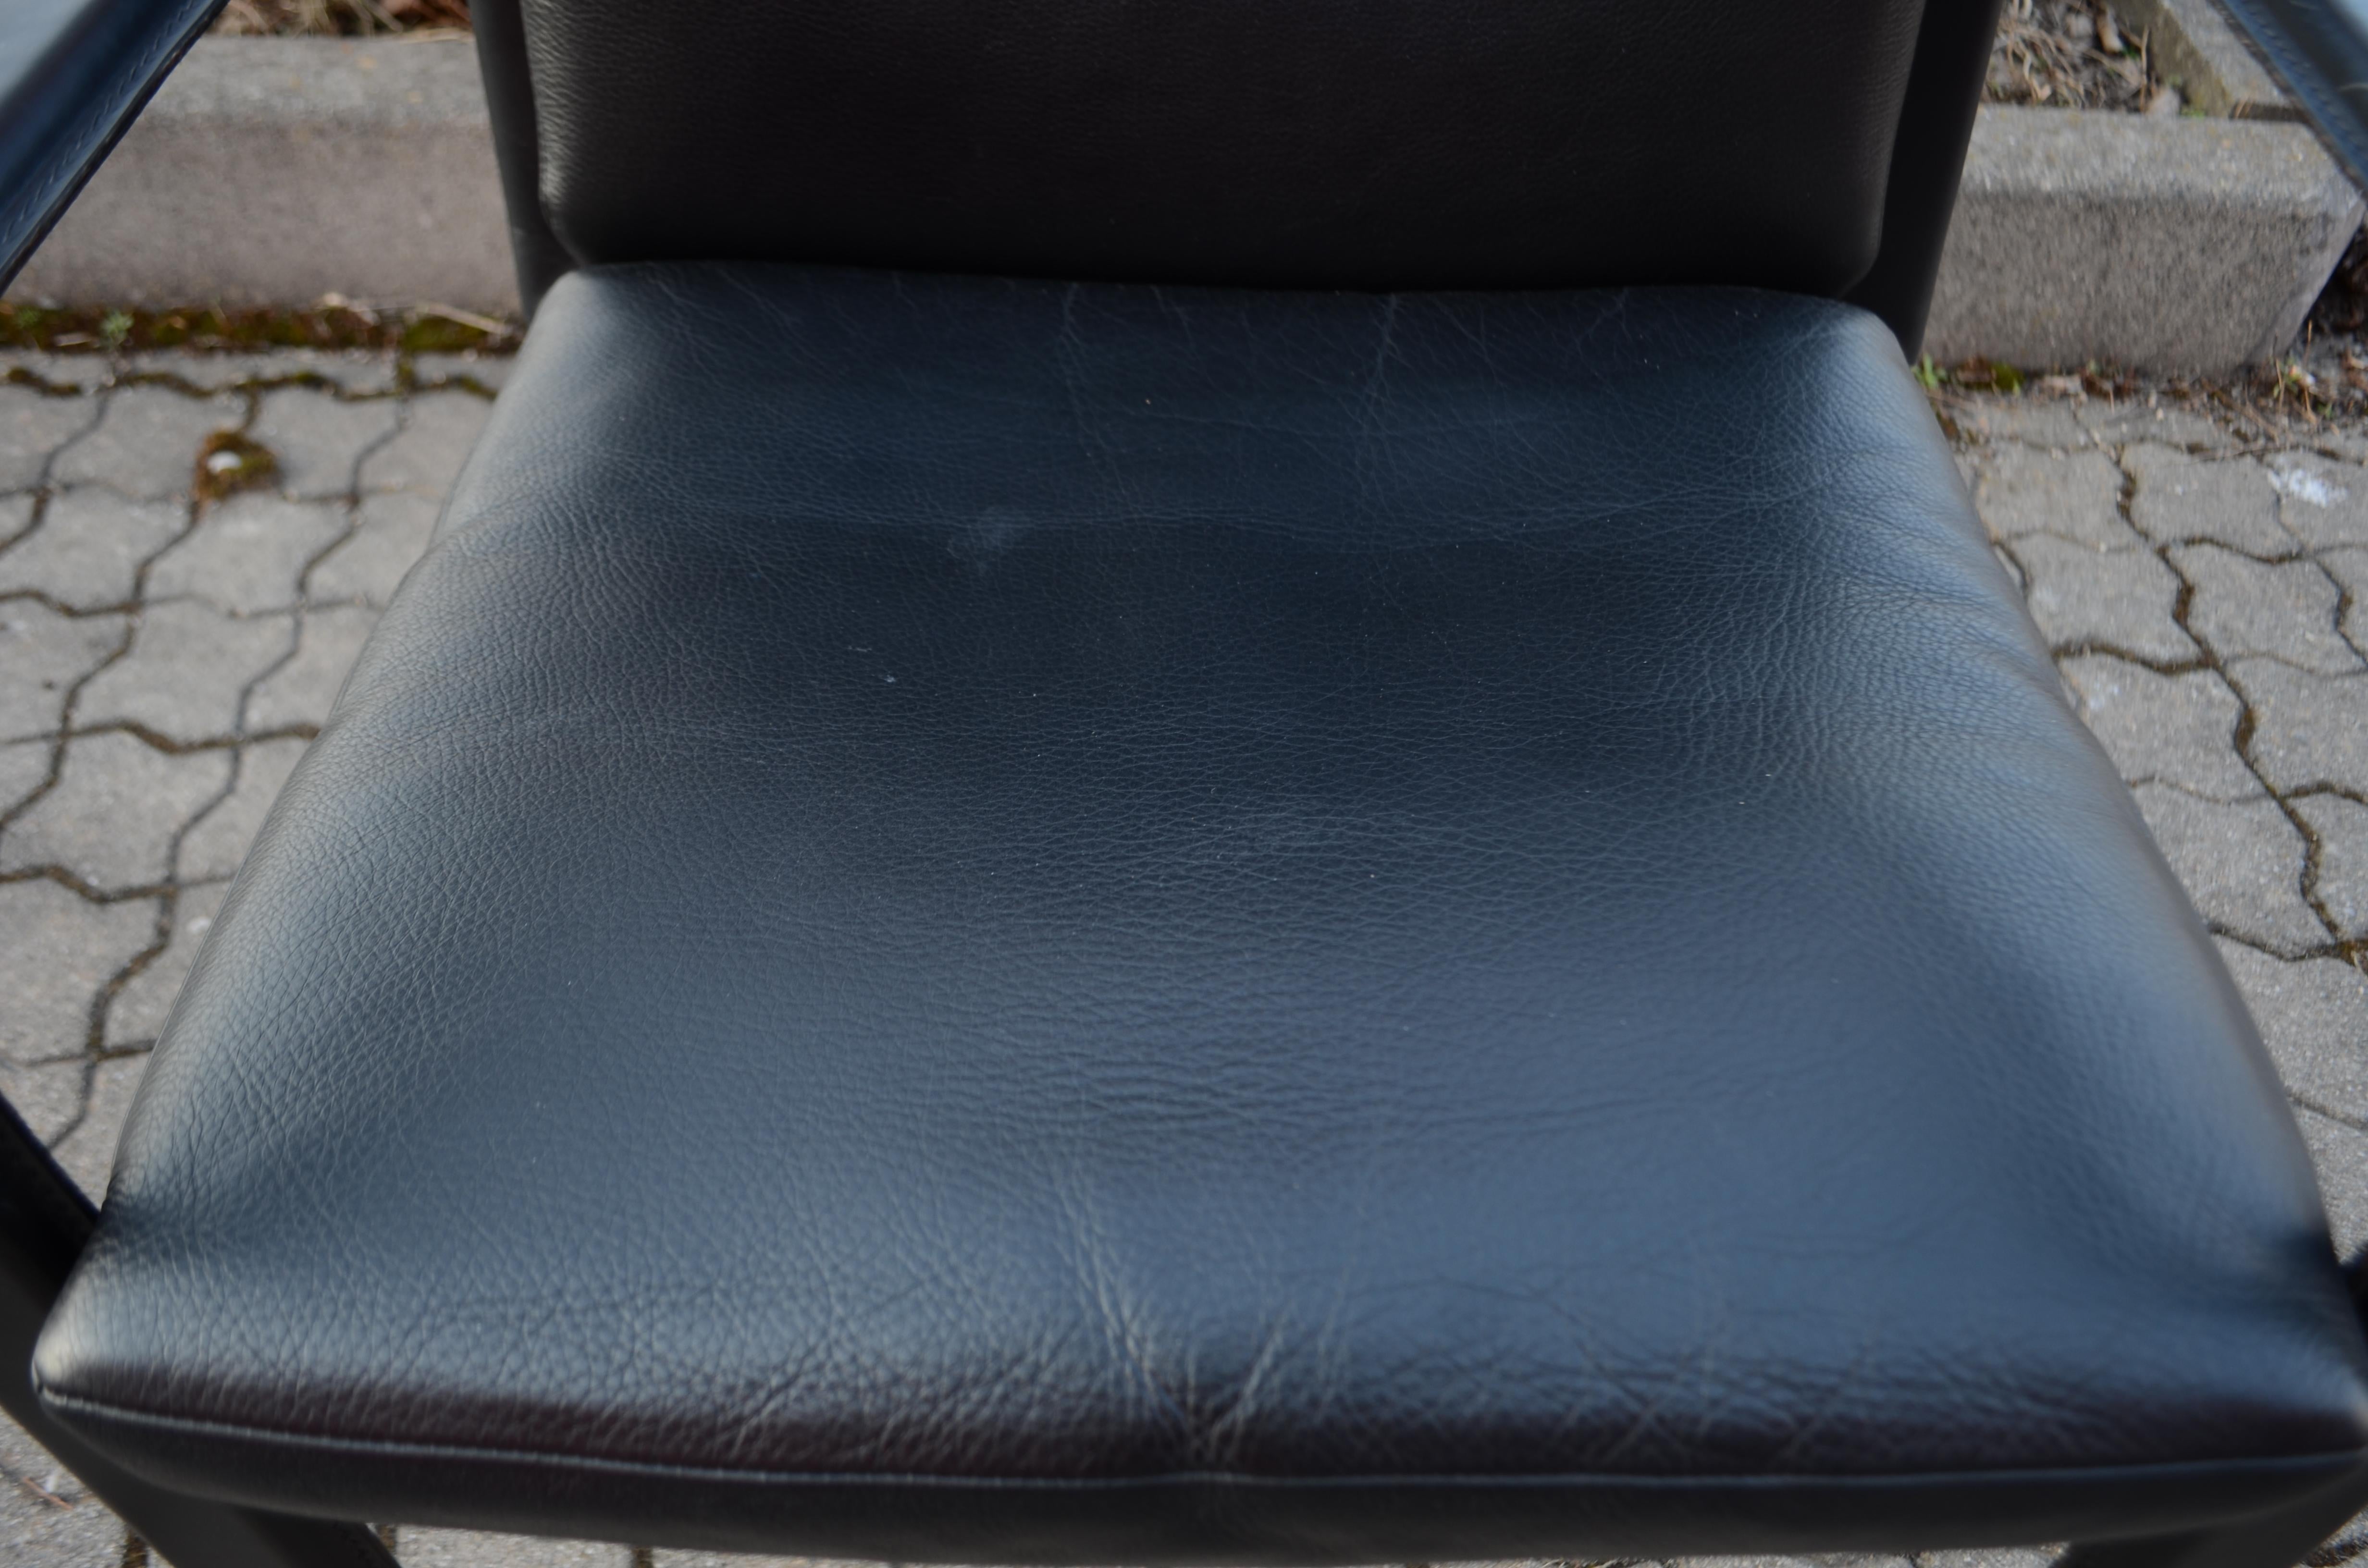 Foam Matteo Grassi Black Saddle Leather Chair Armchair Golfo Dei Poti For Sale